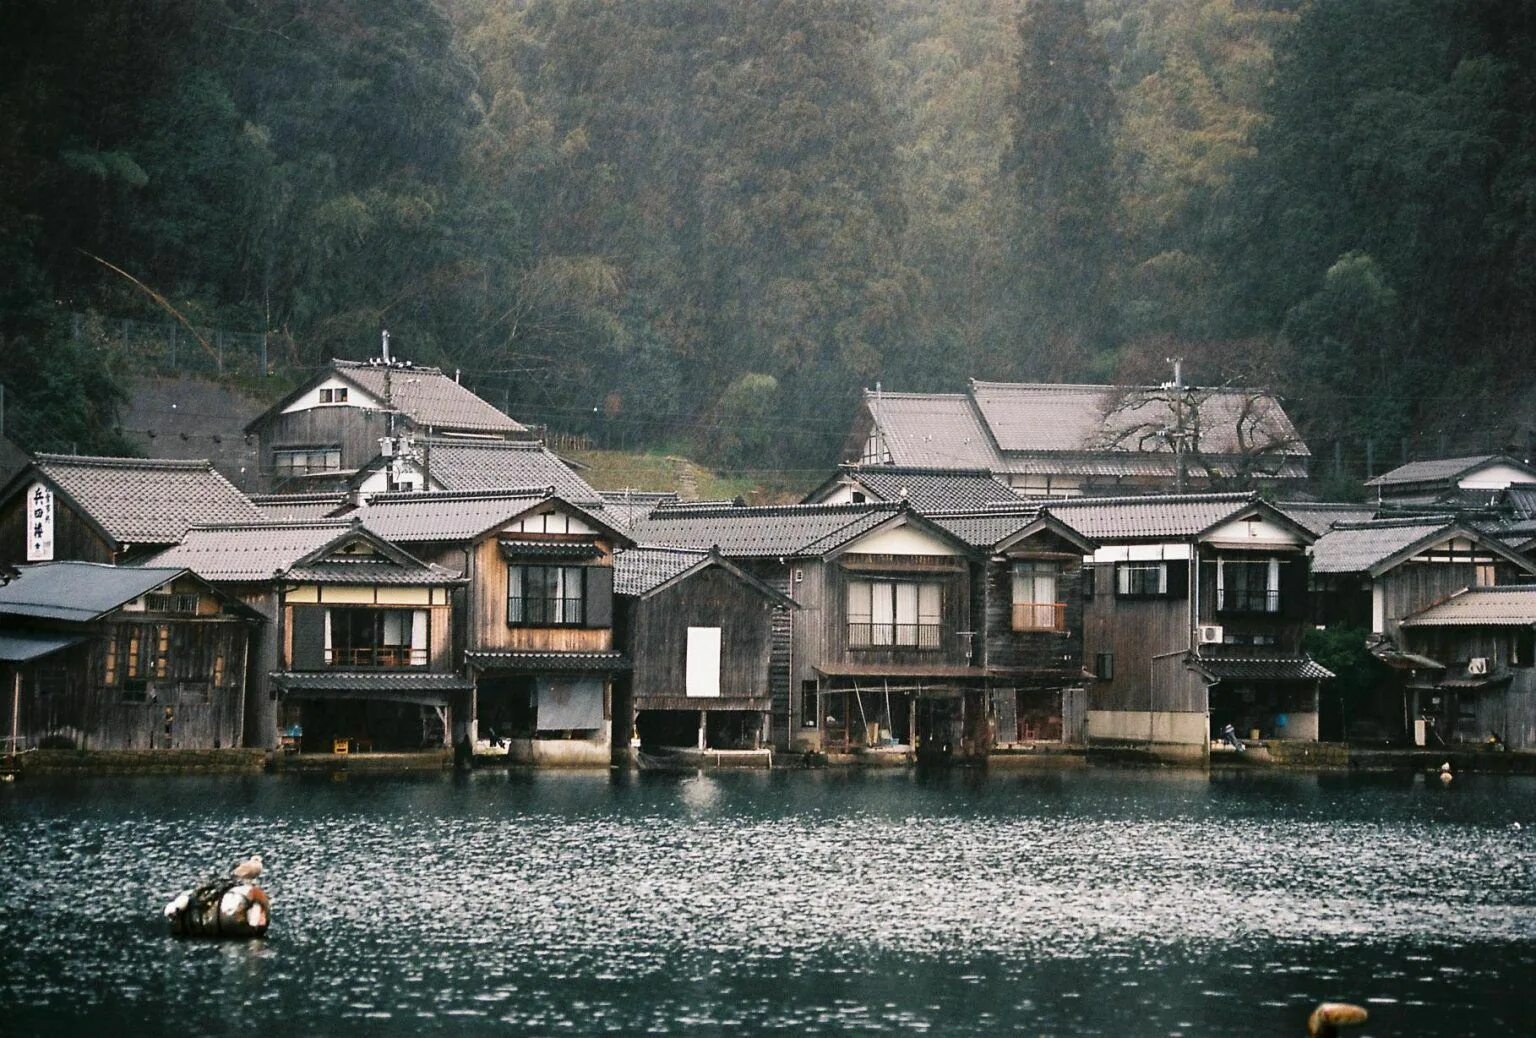 Japanese village. Рыбацкая деревня Япония. Япония Киото деревня. Сугисава японская деревня. Деревня Уодзу Япония.